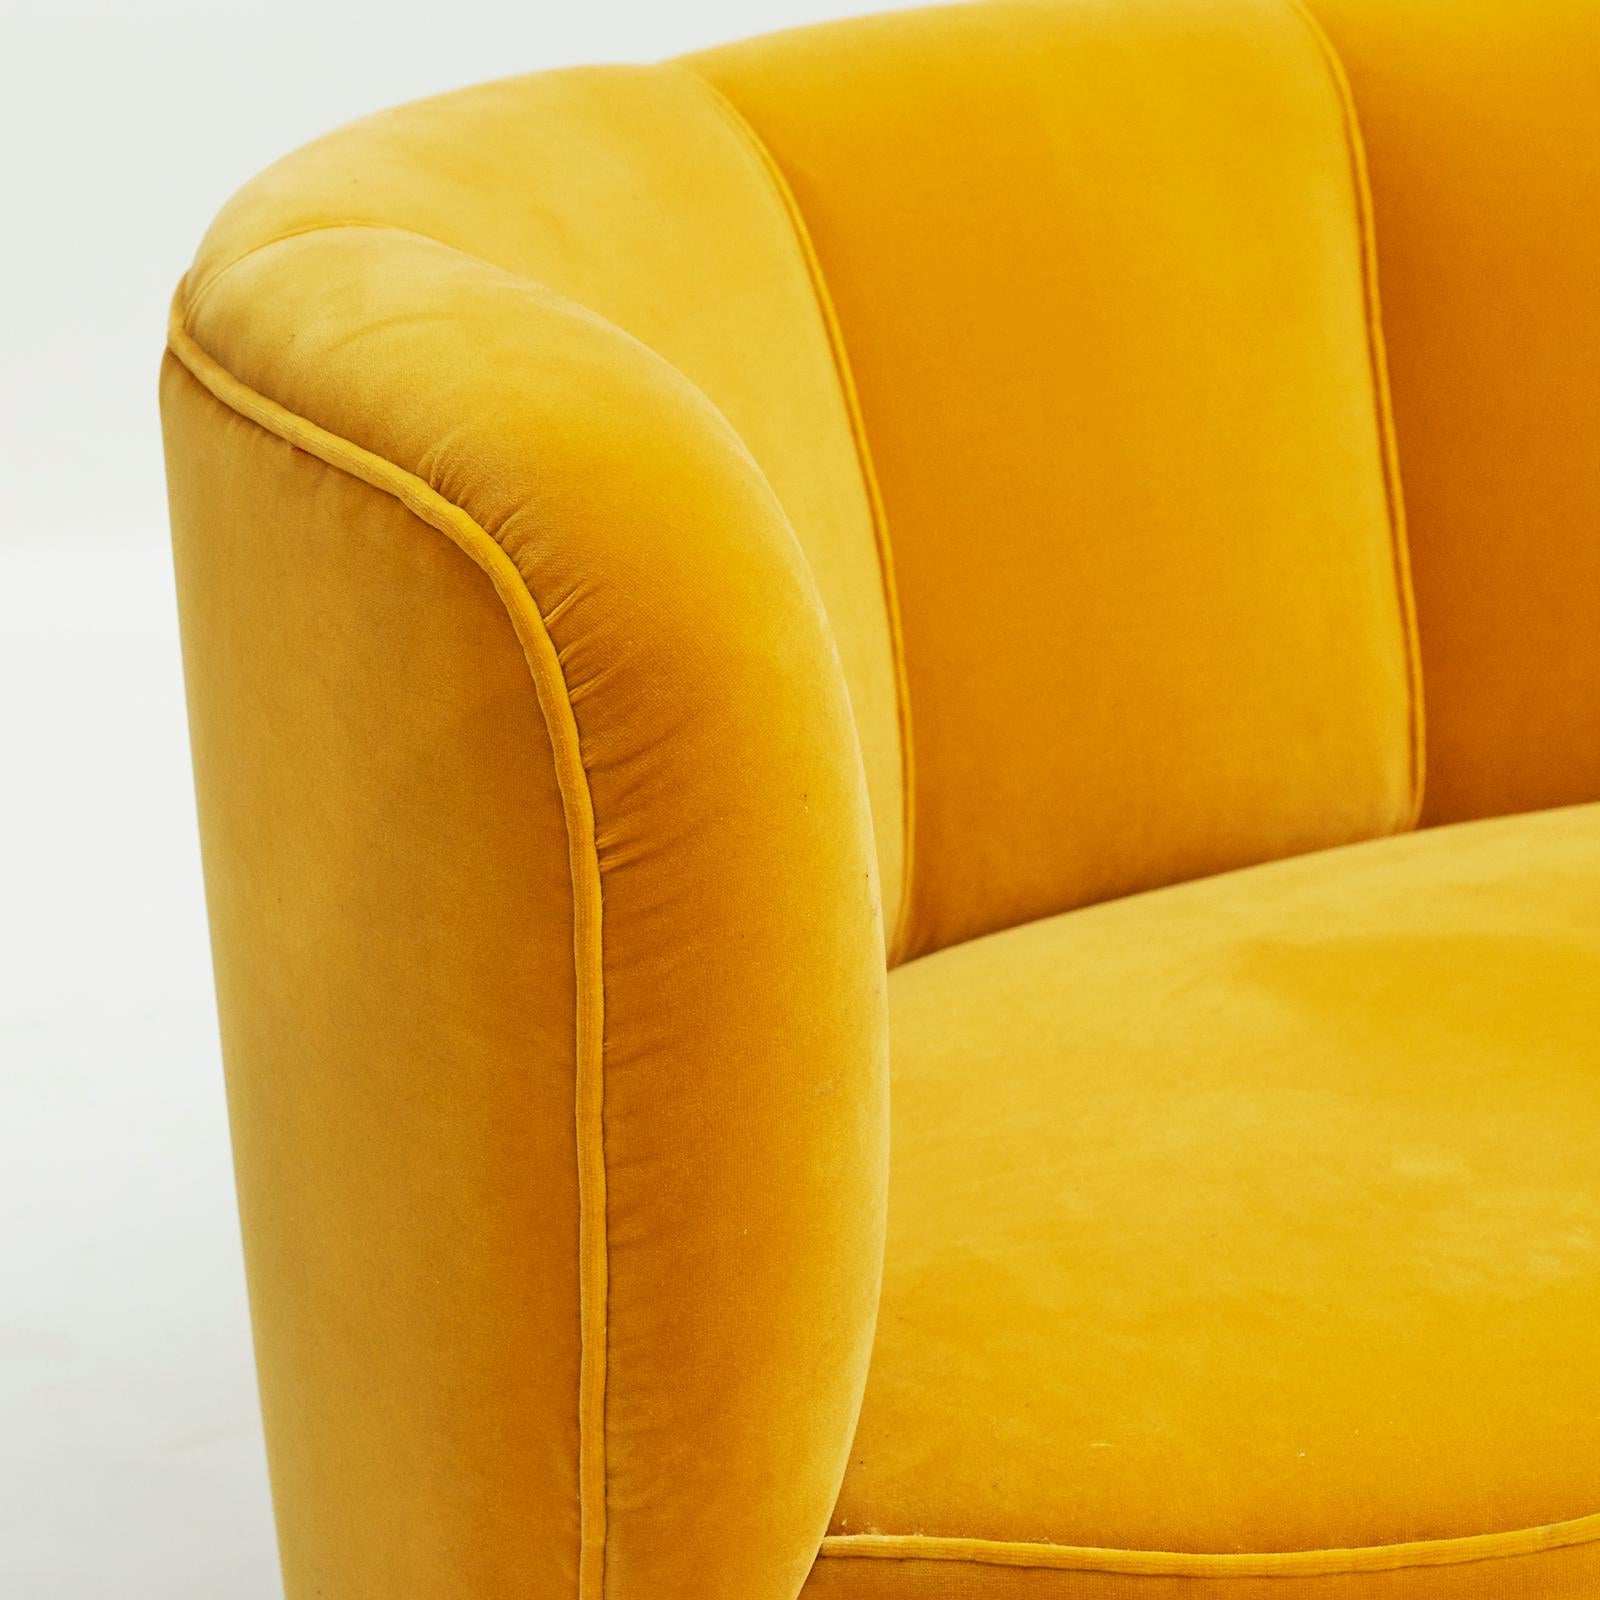 Banana sofa, Danish design circa 1950. Exceptionally beautiful sway, spherical mahogany legs, reupholstered in yellow velor by Manuel Canovas.